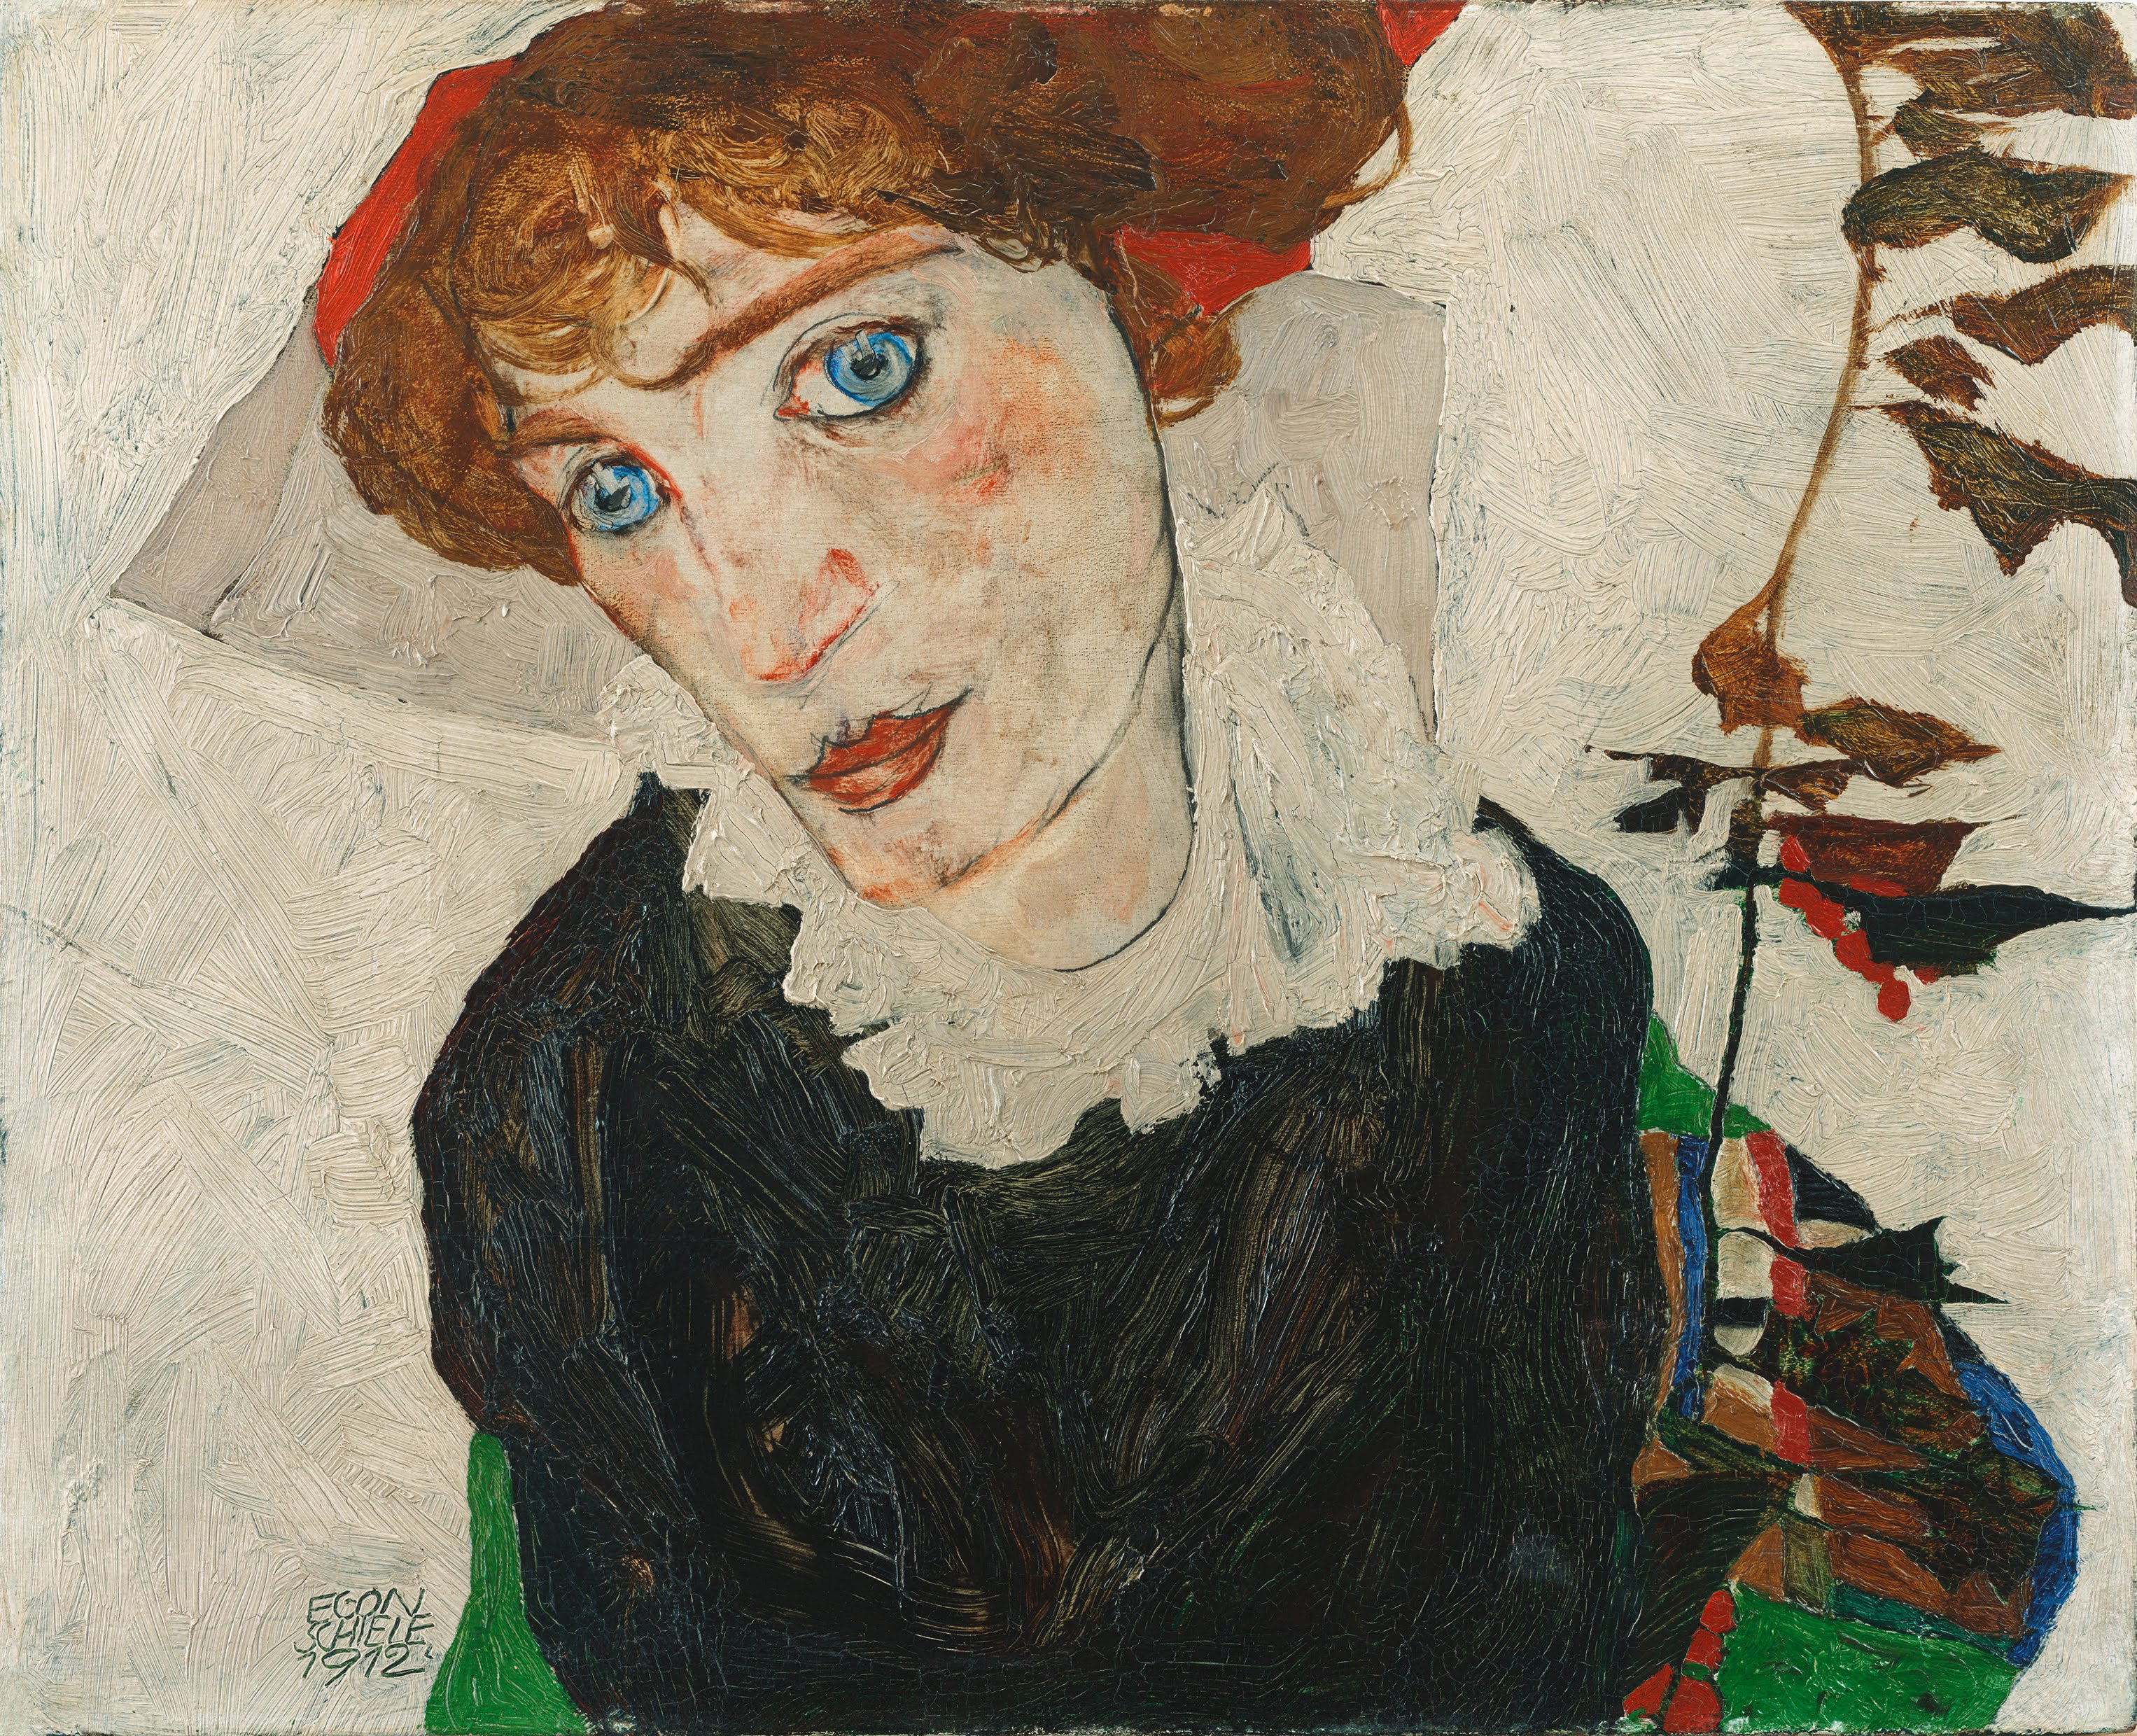 Валли Нойциль (Wally Neuzil) by Egon Schiele - 1912 - 32 x 39.8 см 